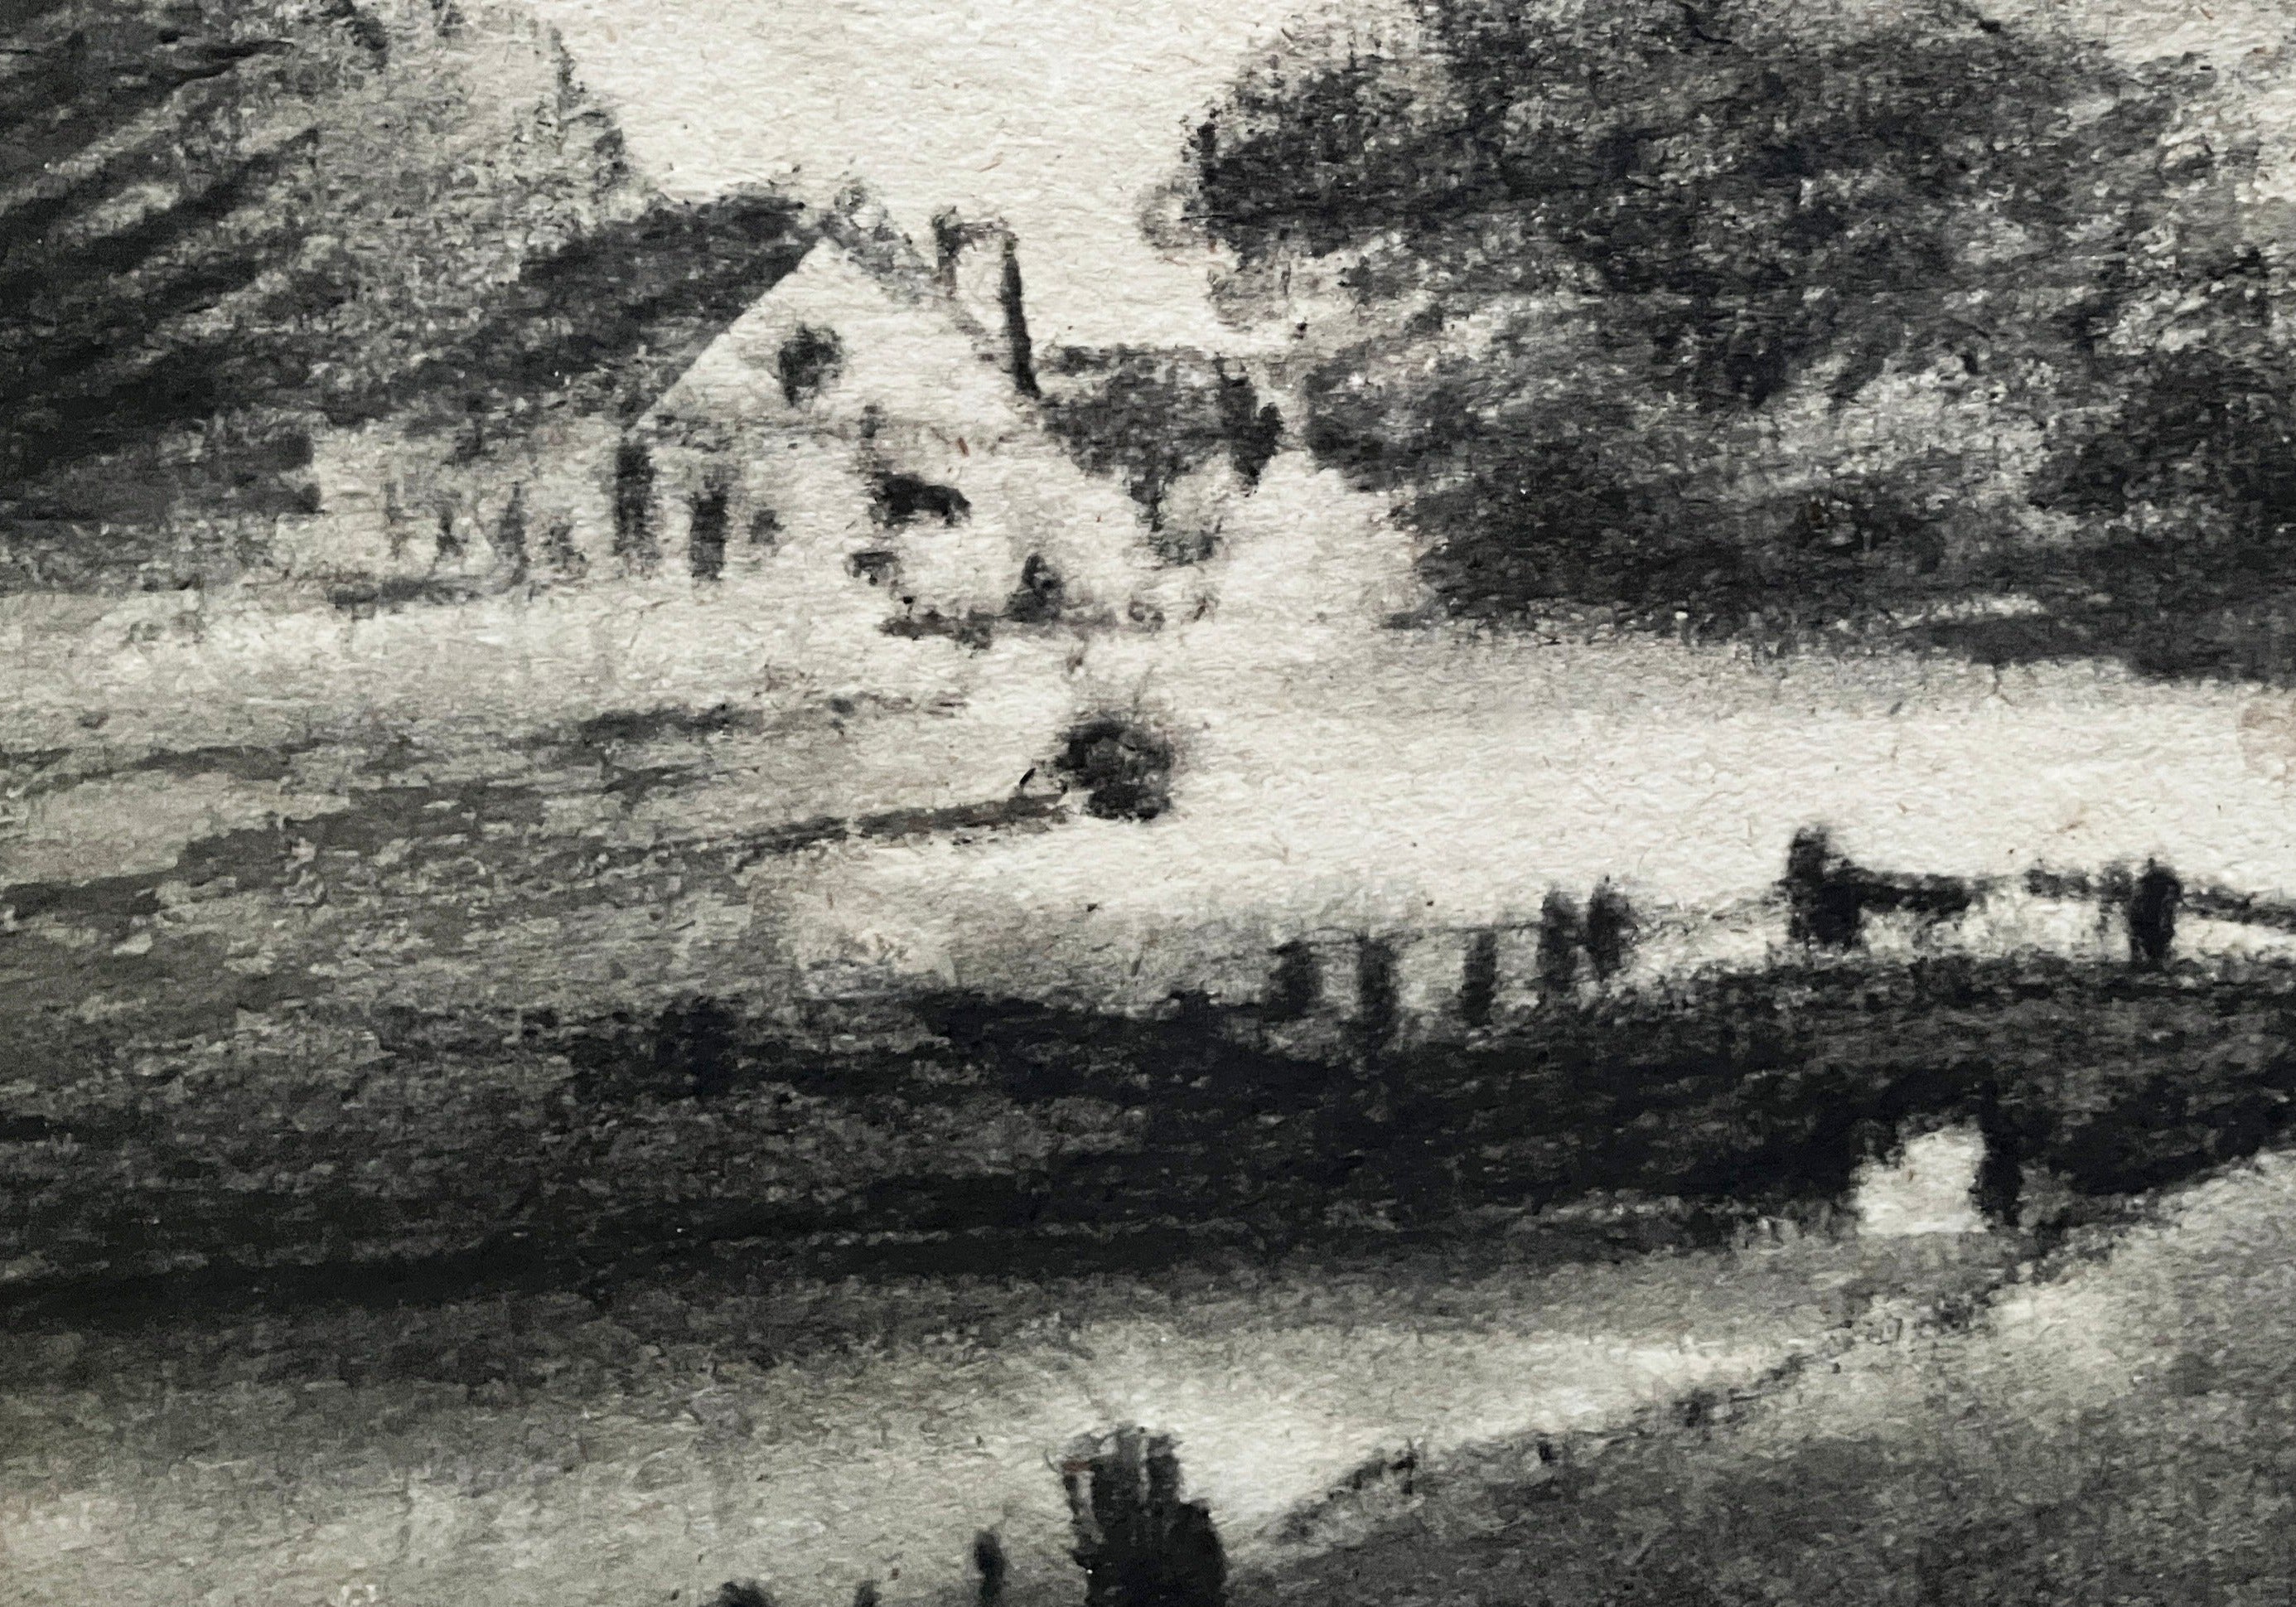 Dr Thomas Monro (c.1790s). Black chalk, wash and brush – cottage beside pond